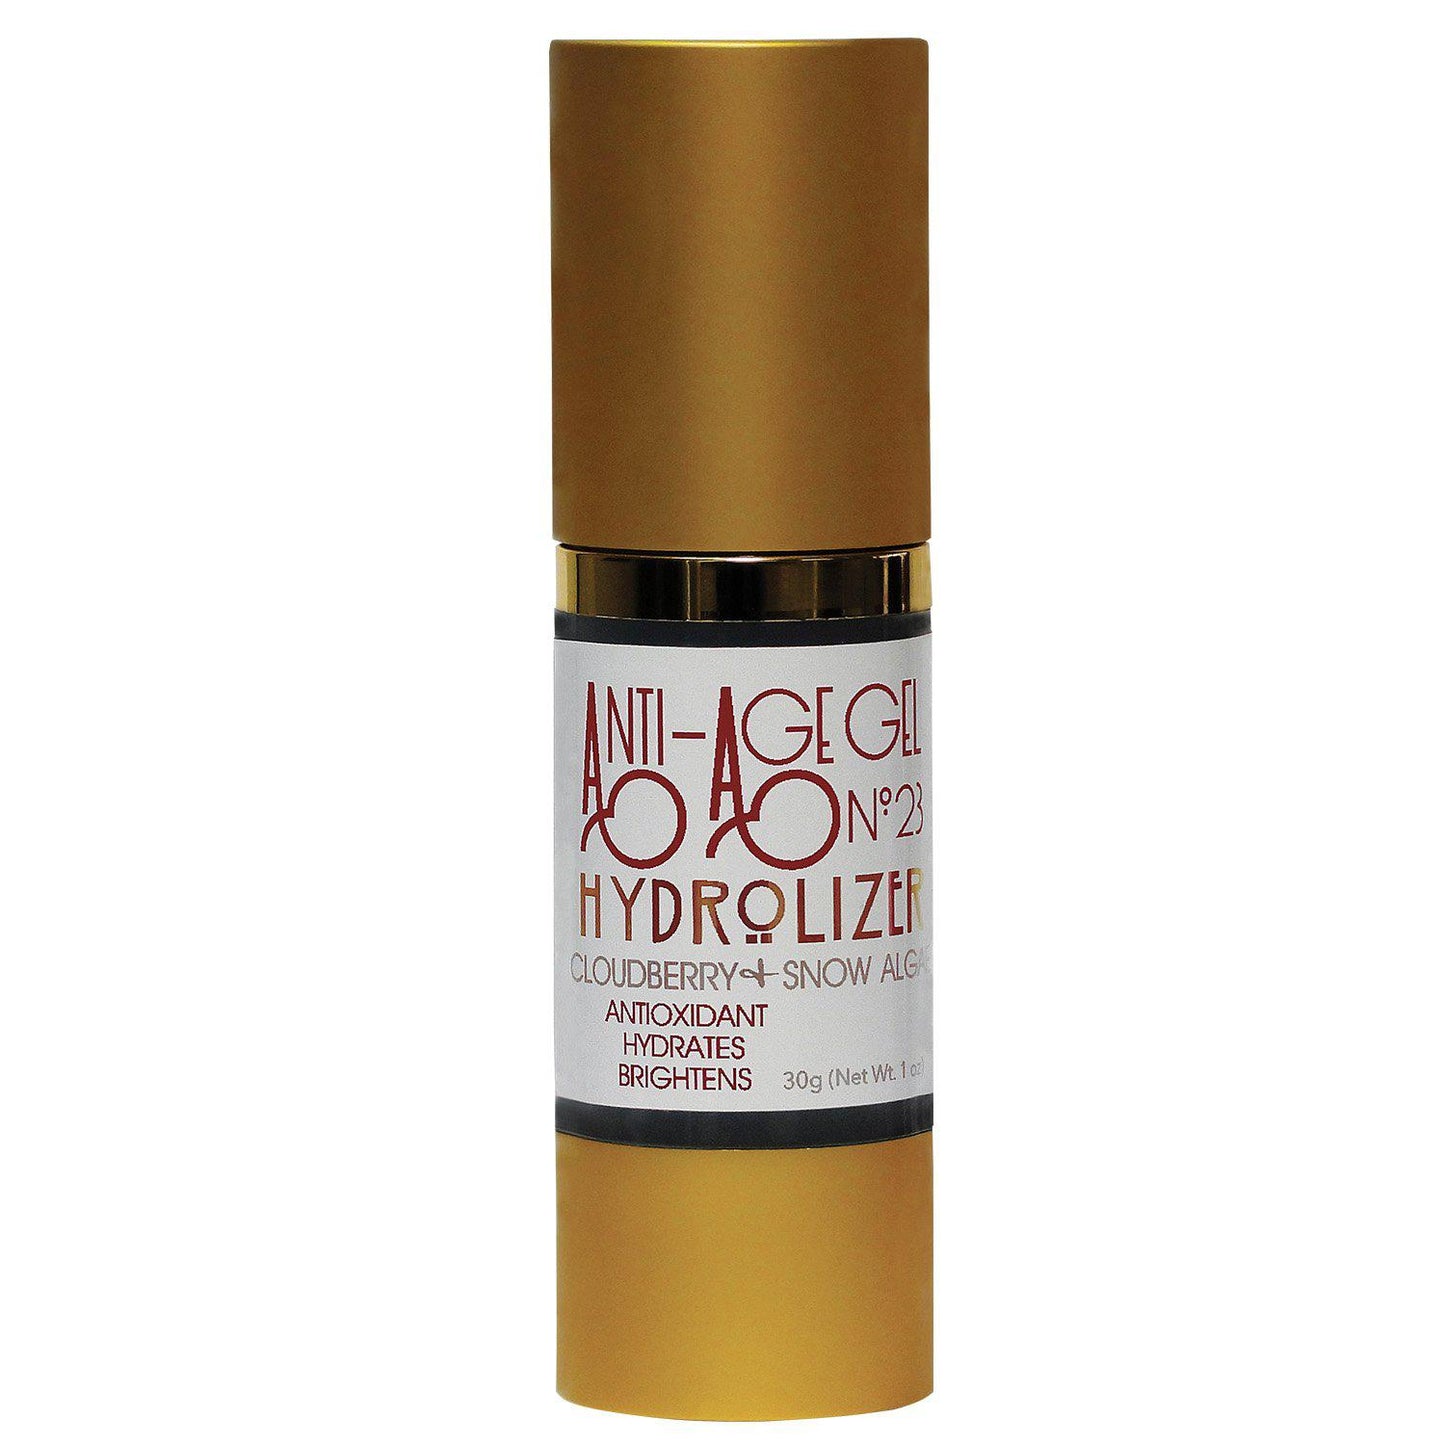 1 Pump Bottle Anti-Age Gel Hydrolizer - No.23 - With Cloudberry and Snow Algae